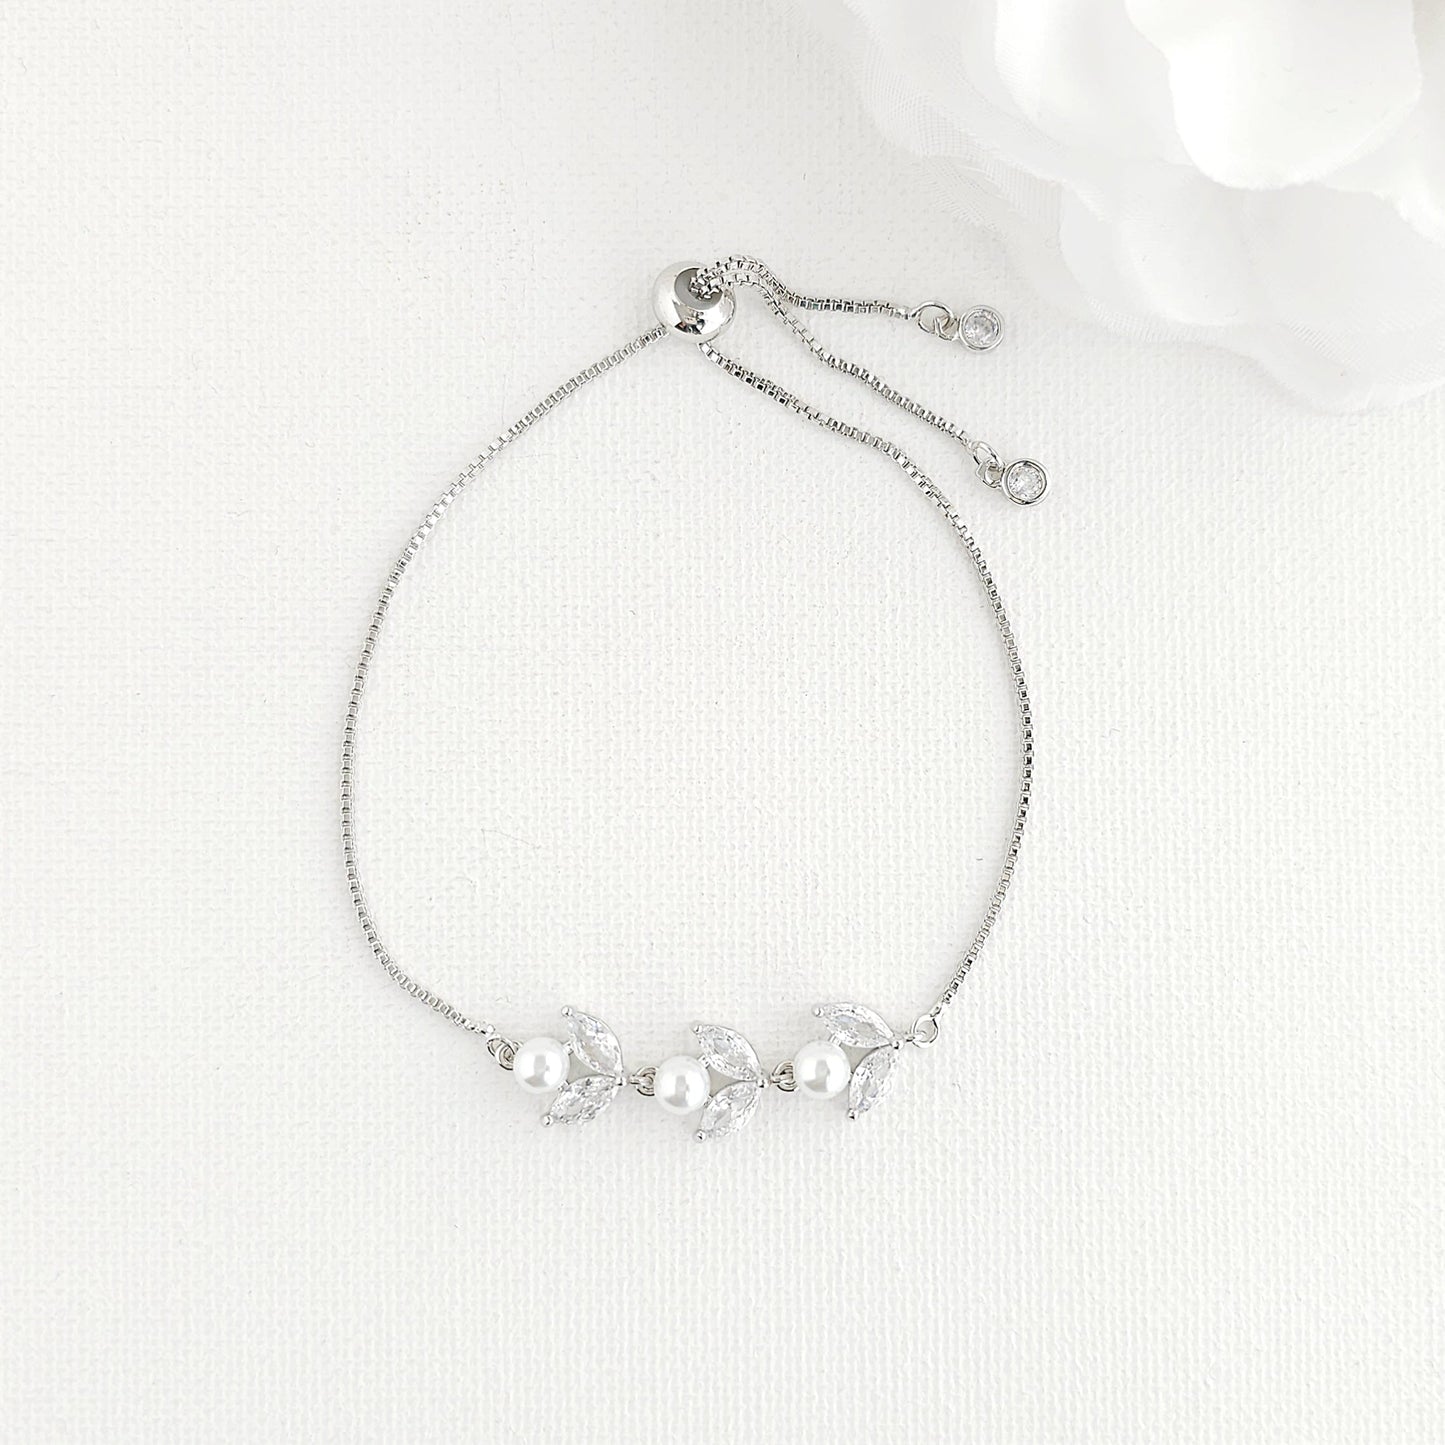 Dainty Rose Gold Bracelet for Brides and Bridemaids- Liela